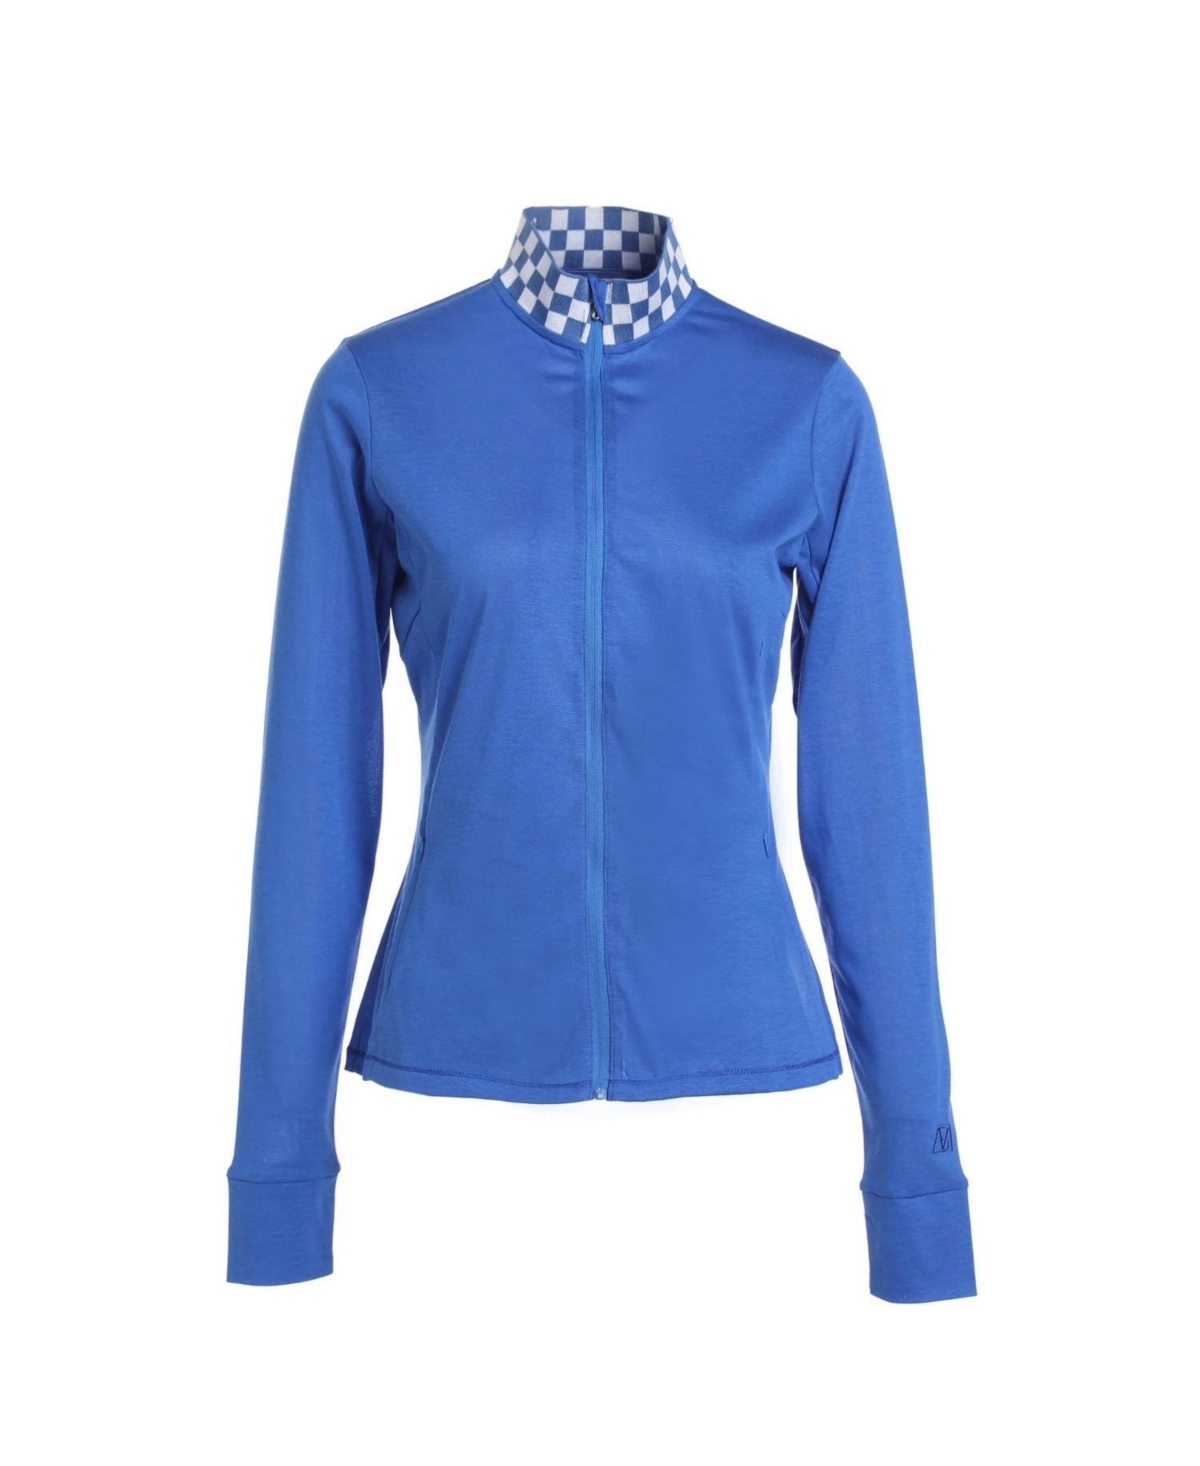 Belle mere Women's Checker Full-Zipper Long Sleeves Top - Blue